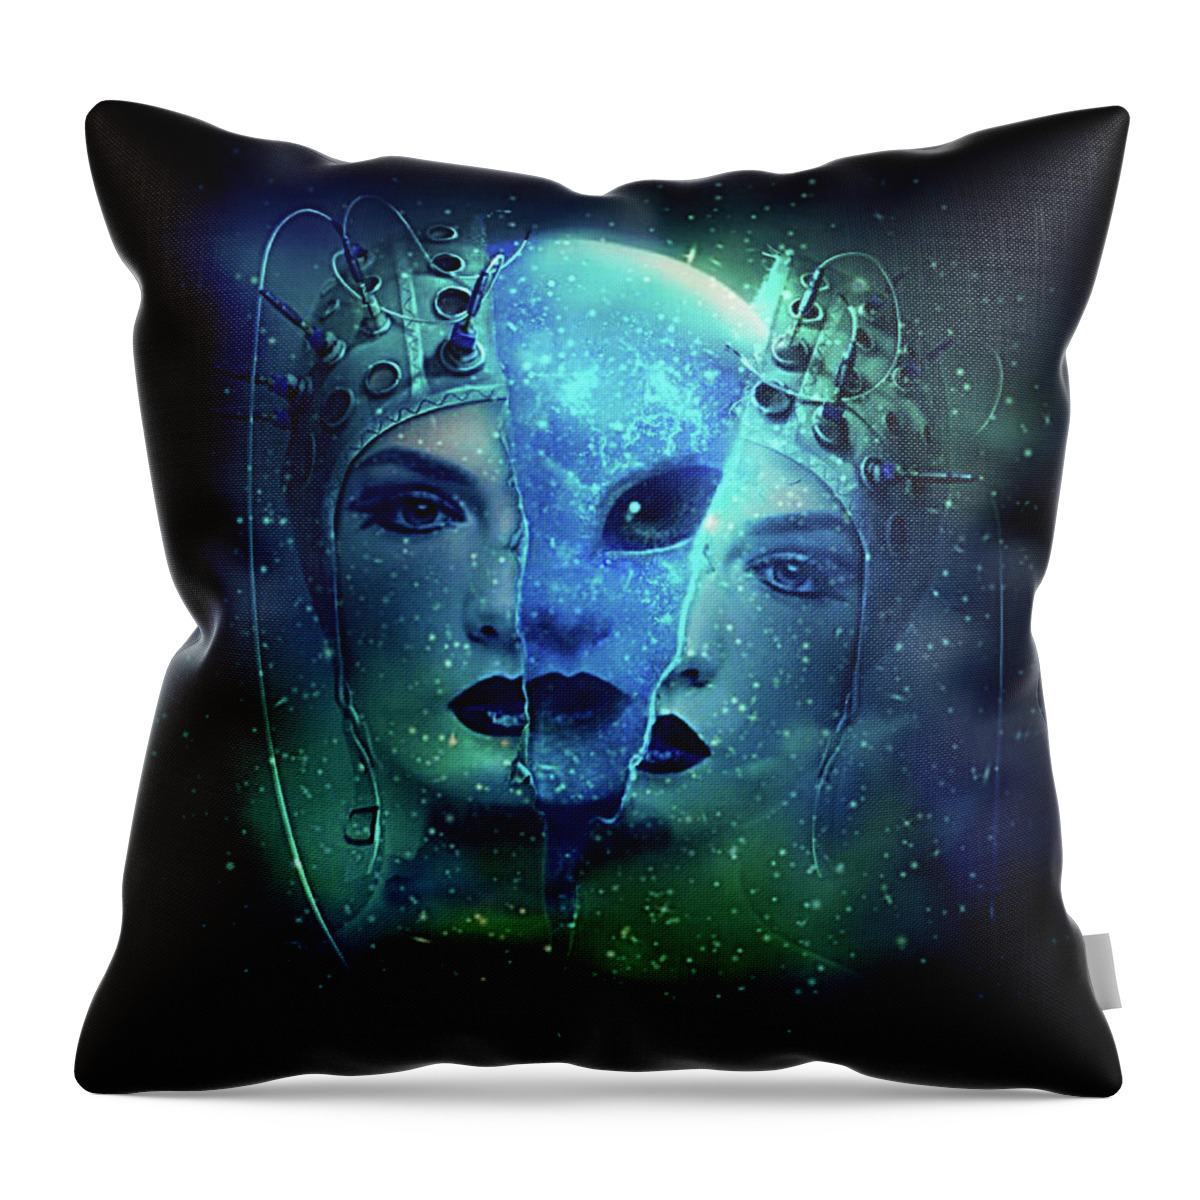 Intergalatic Throw Pillow featuring the digital art Interstellar by Kathy Kelly